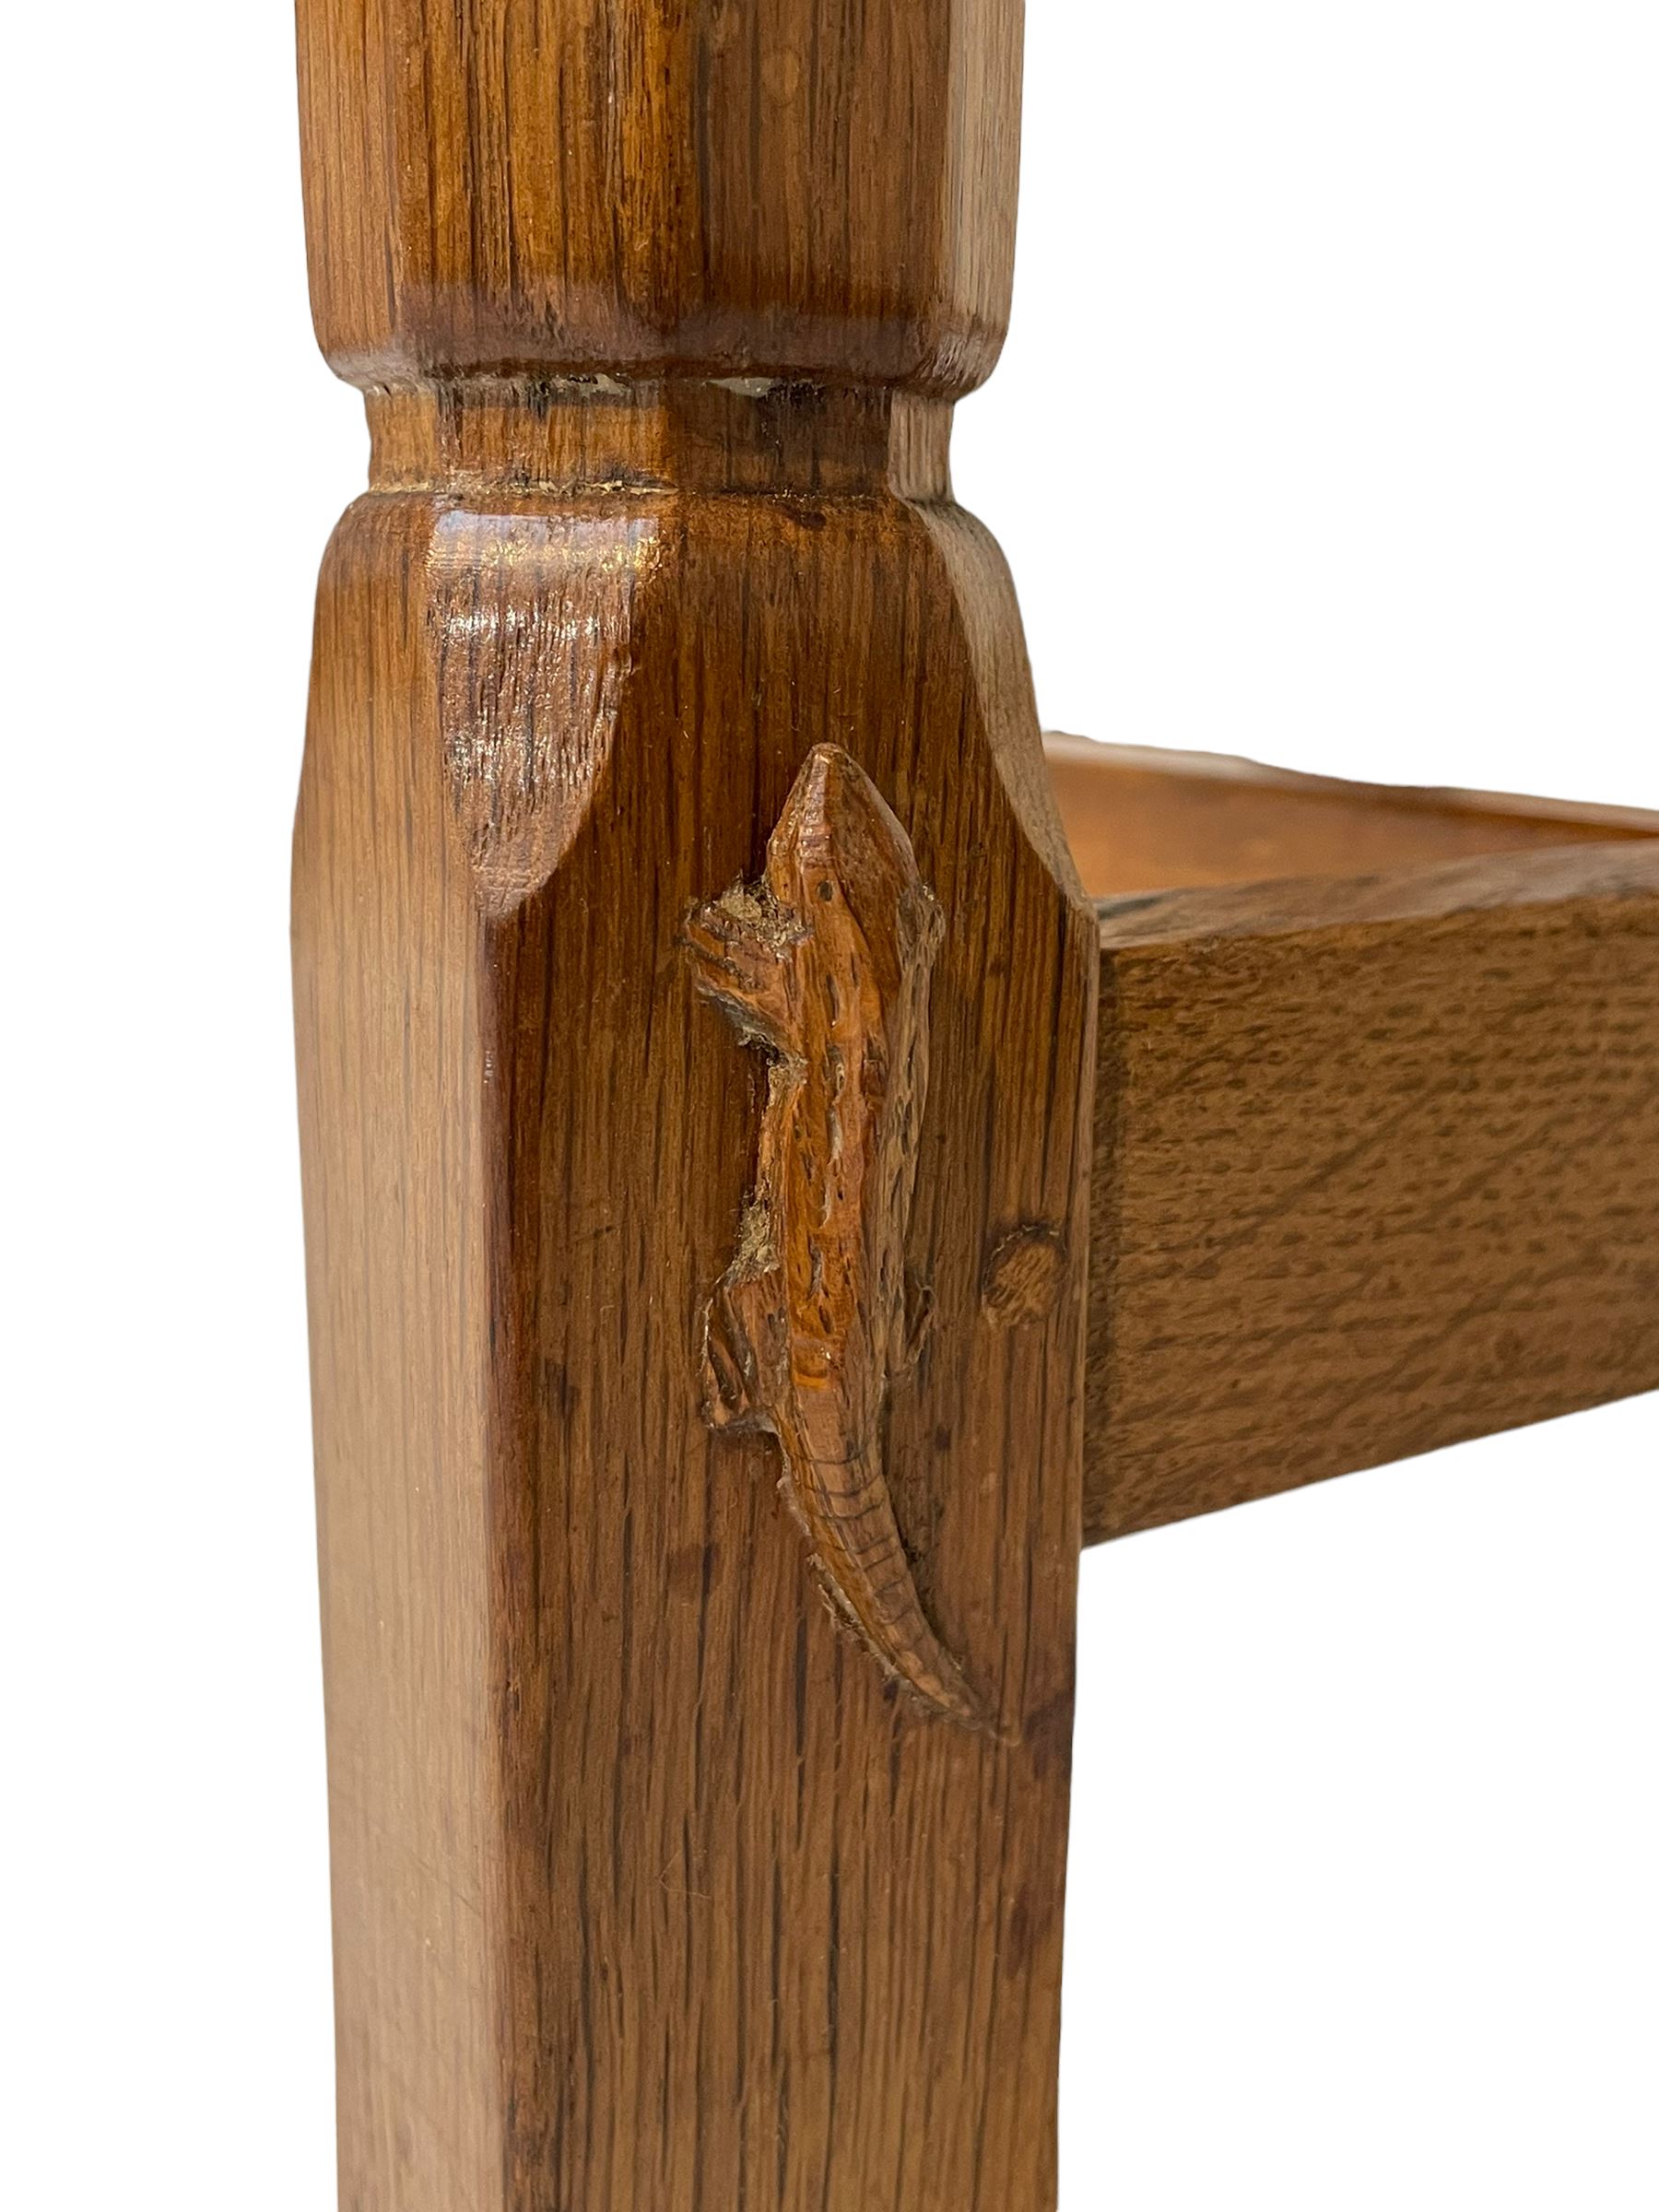 Lizardman - set six oak dining chairs - Image 13 of 13